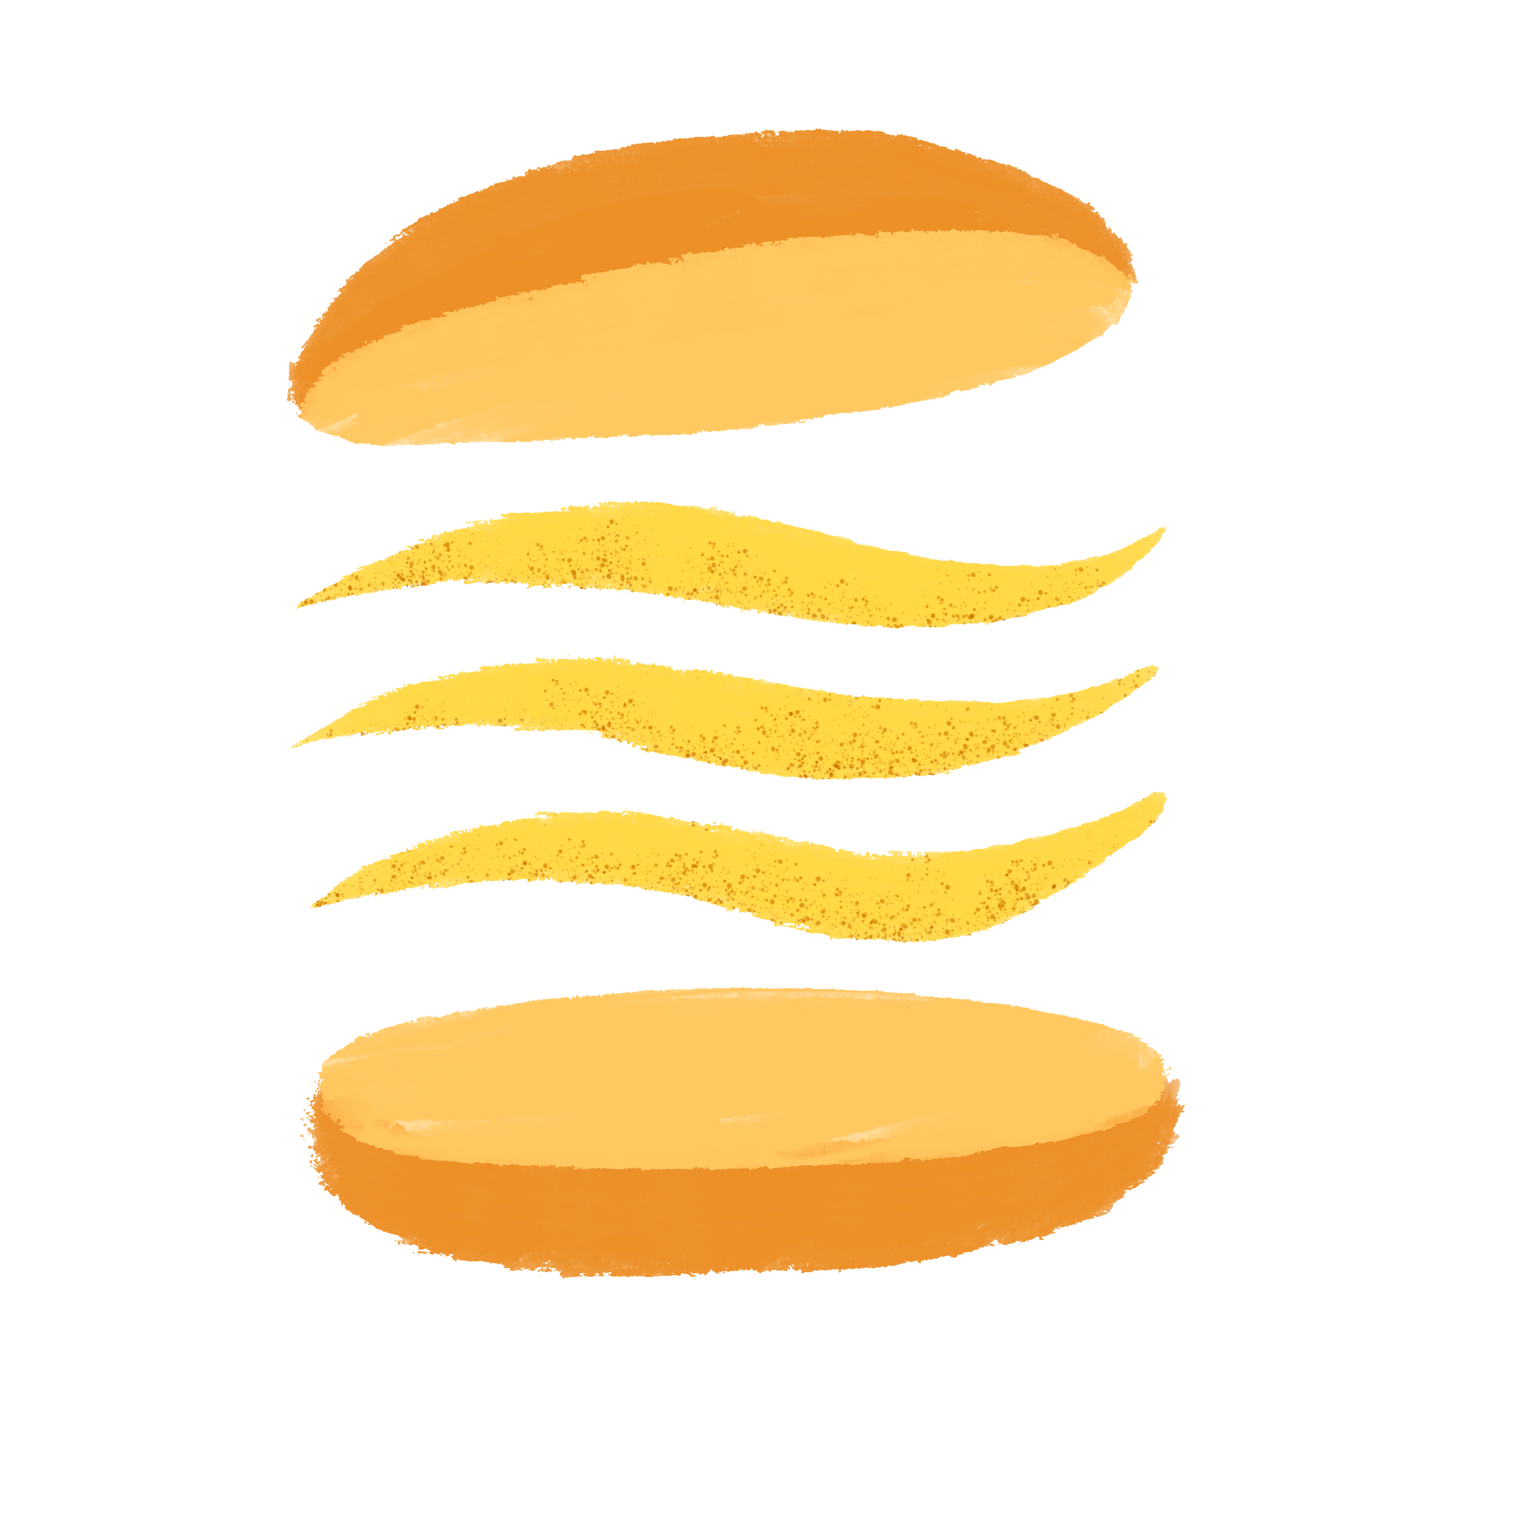 Brushstroke style bun containing three crisps/snacks